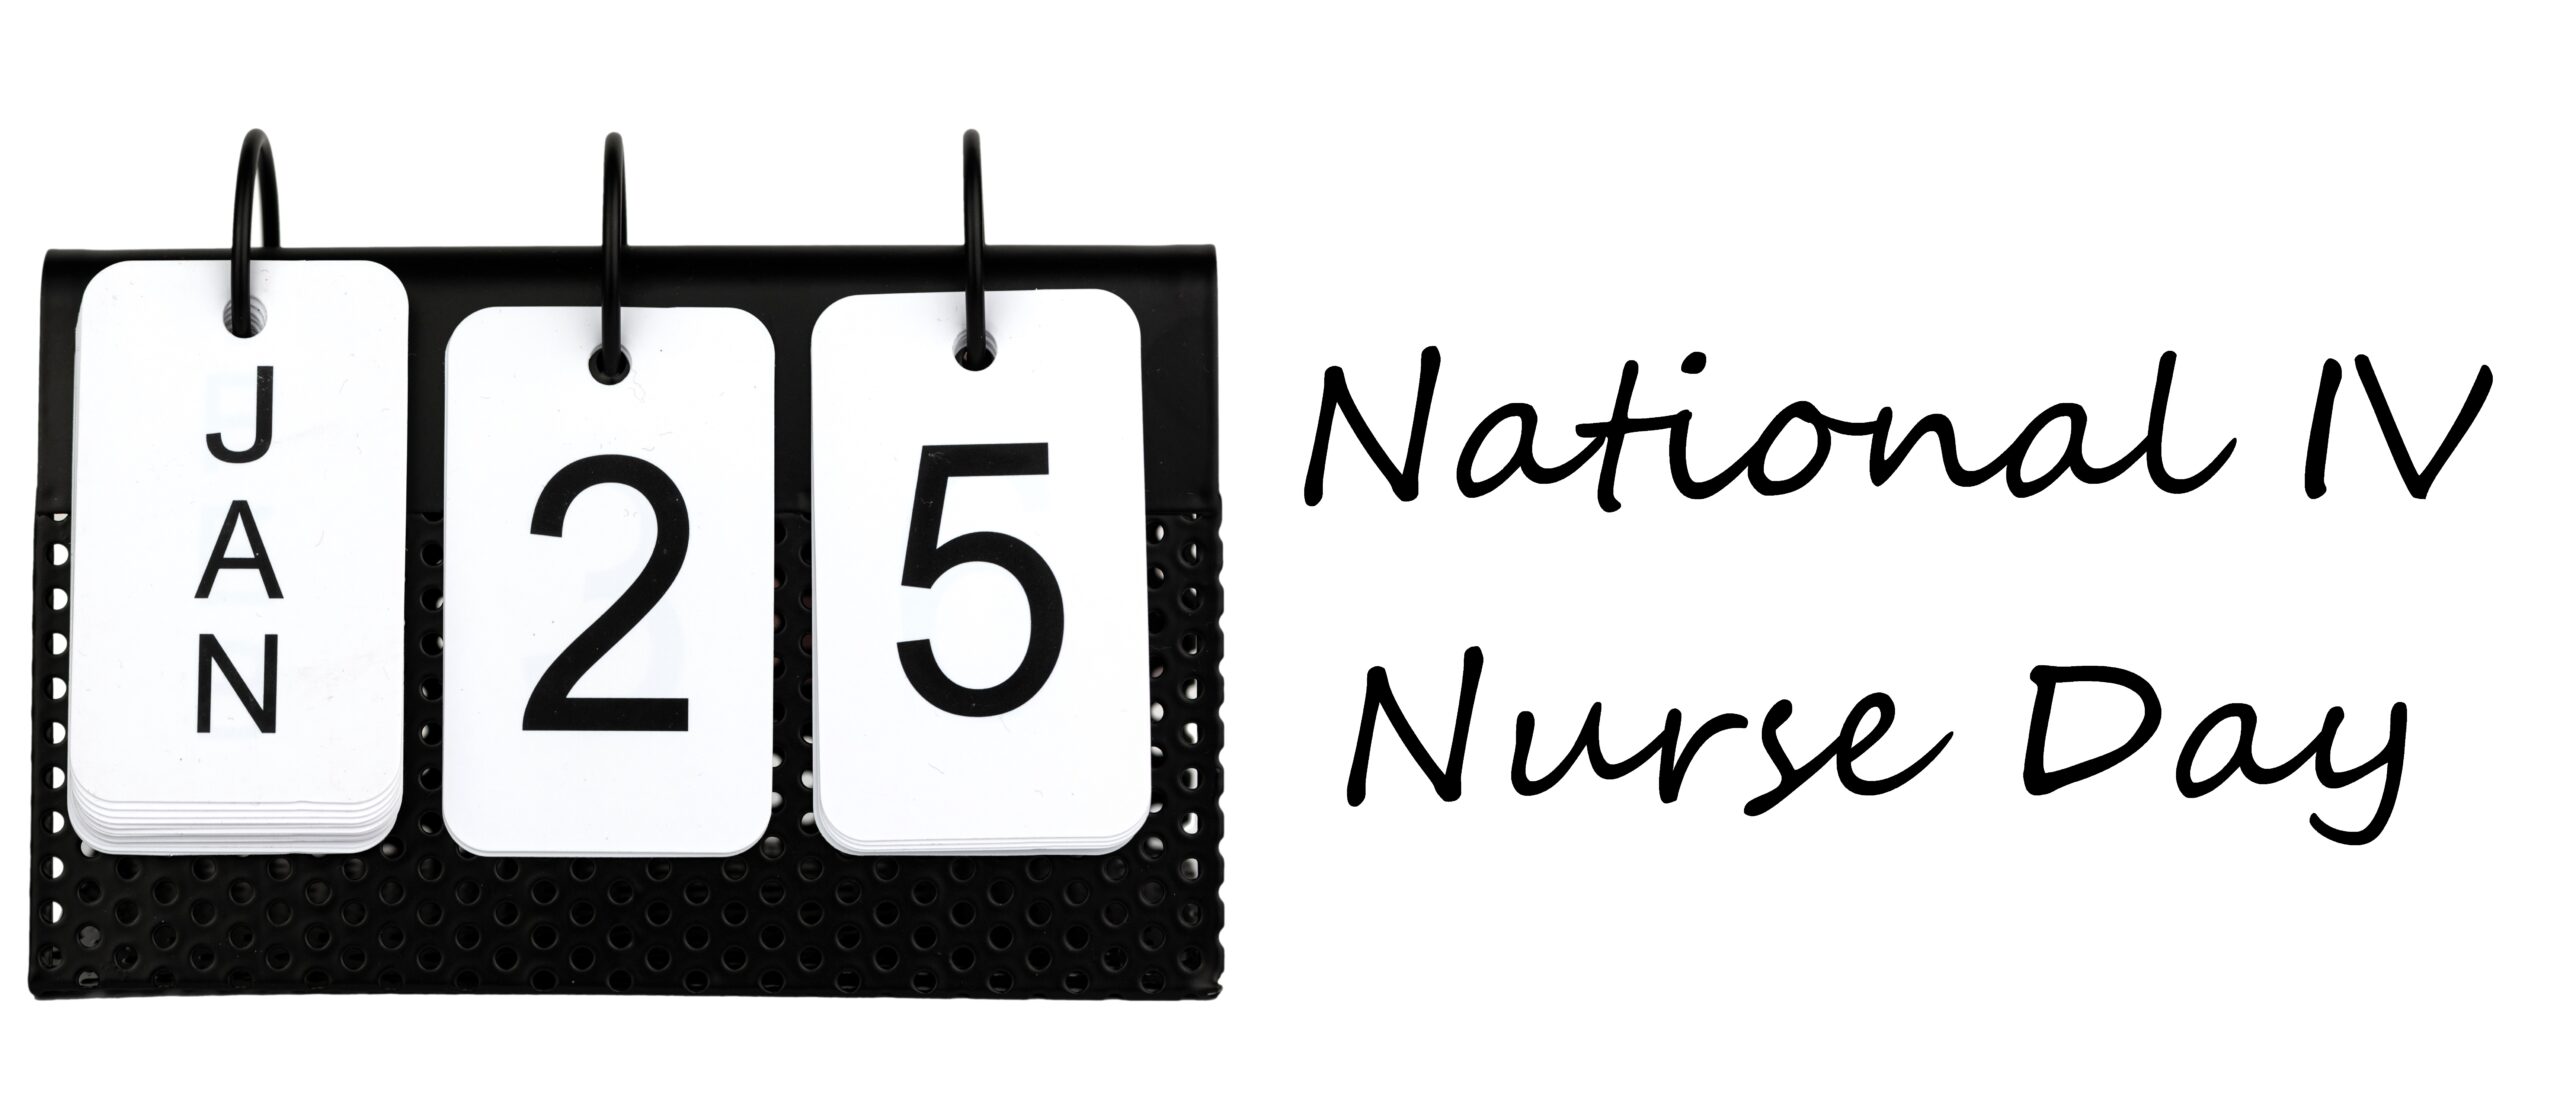 National,Iv,Nurse,Day,-,January,25,-,Usa,Holiday